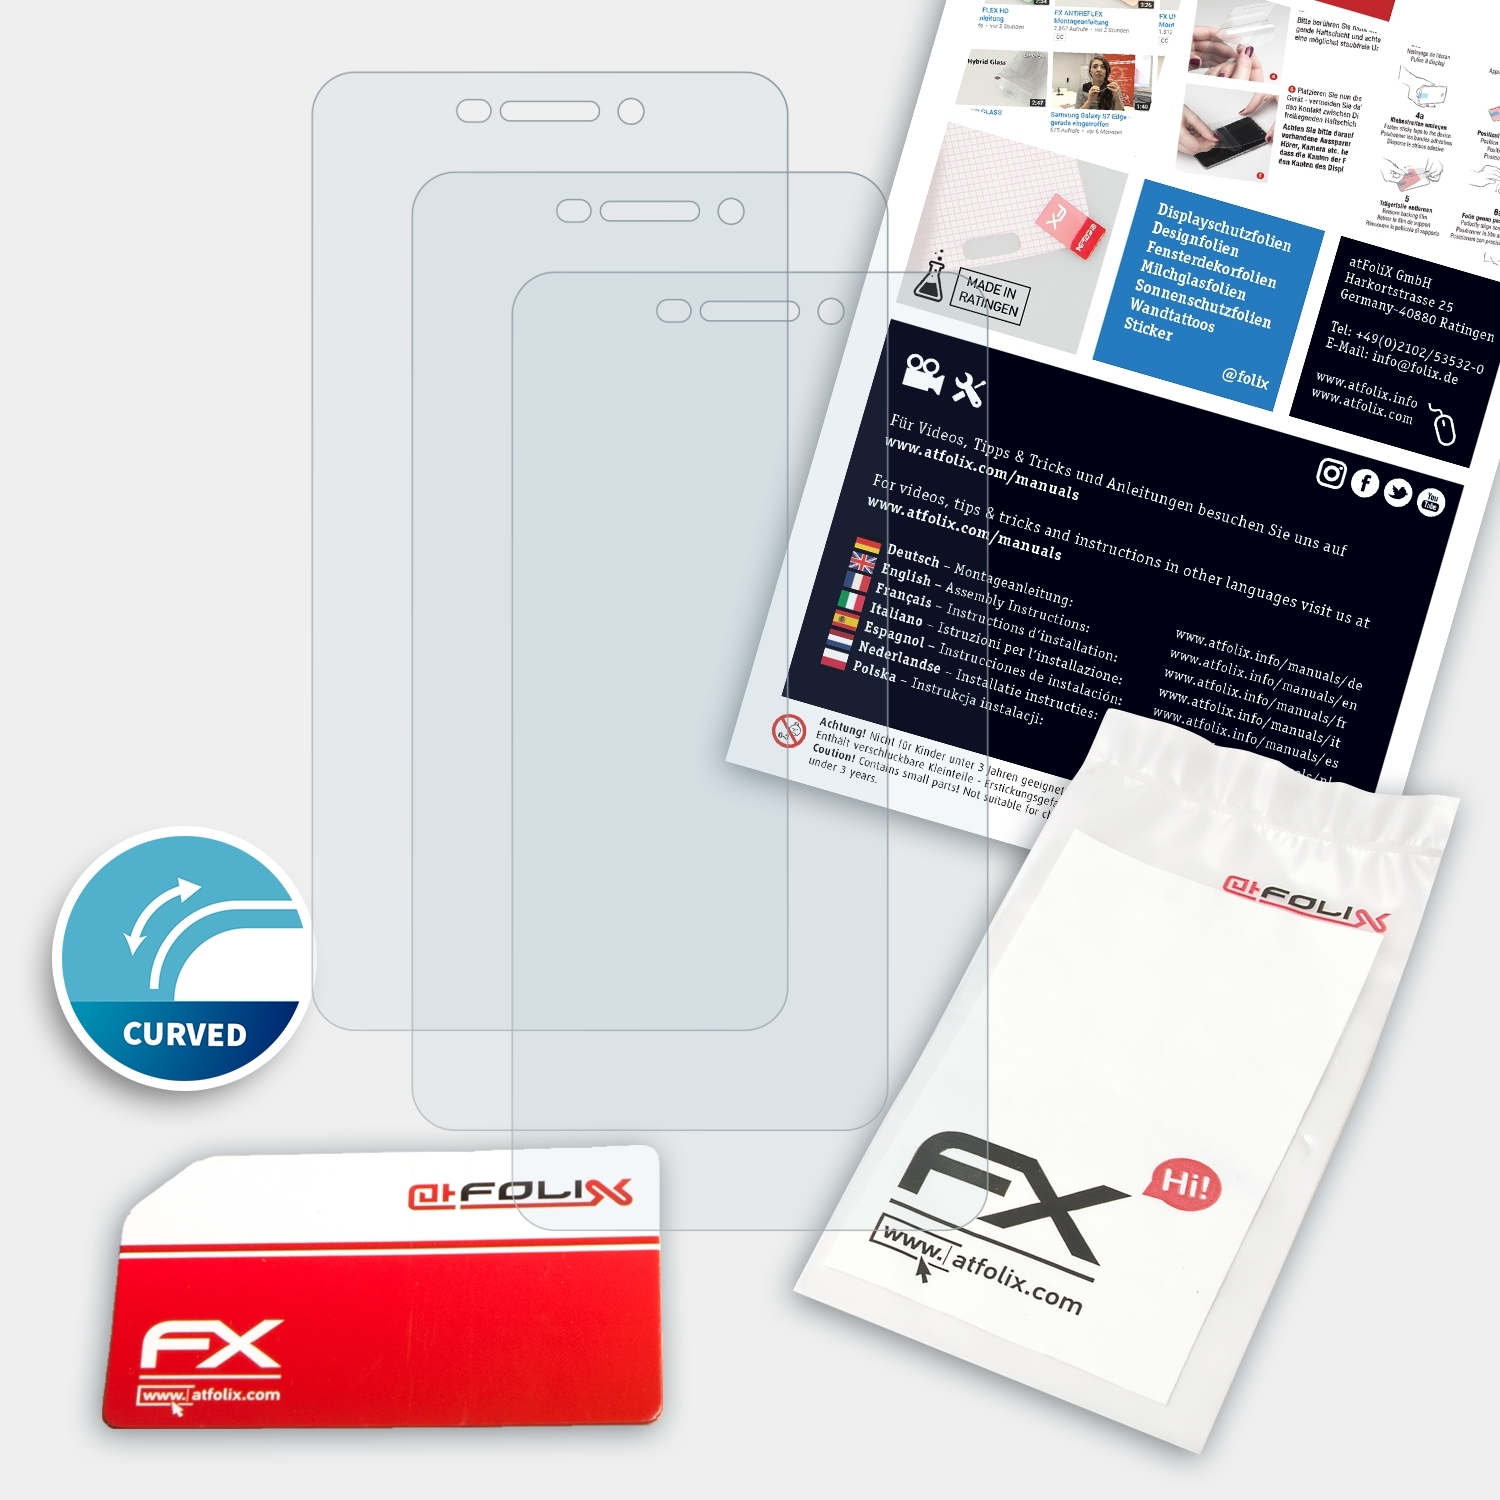 ATFOLIX 3x FX-ActiFleX Displayschutz(für Nokia (2018)) 6